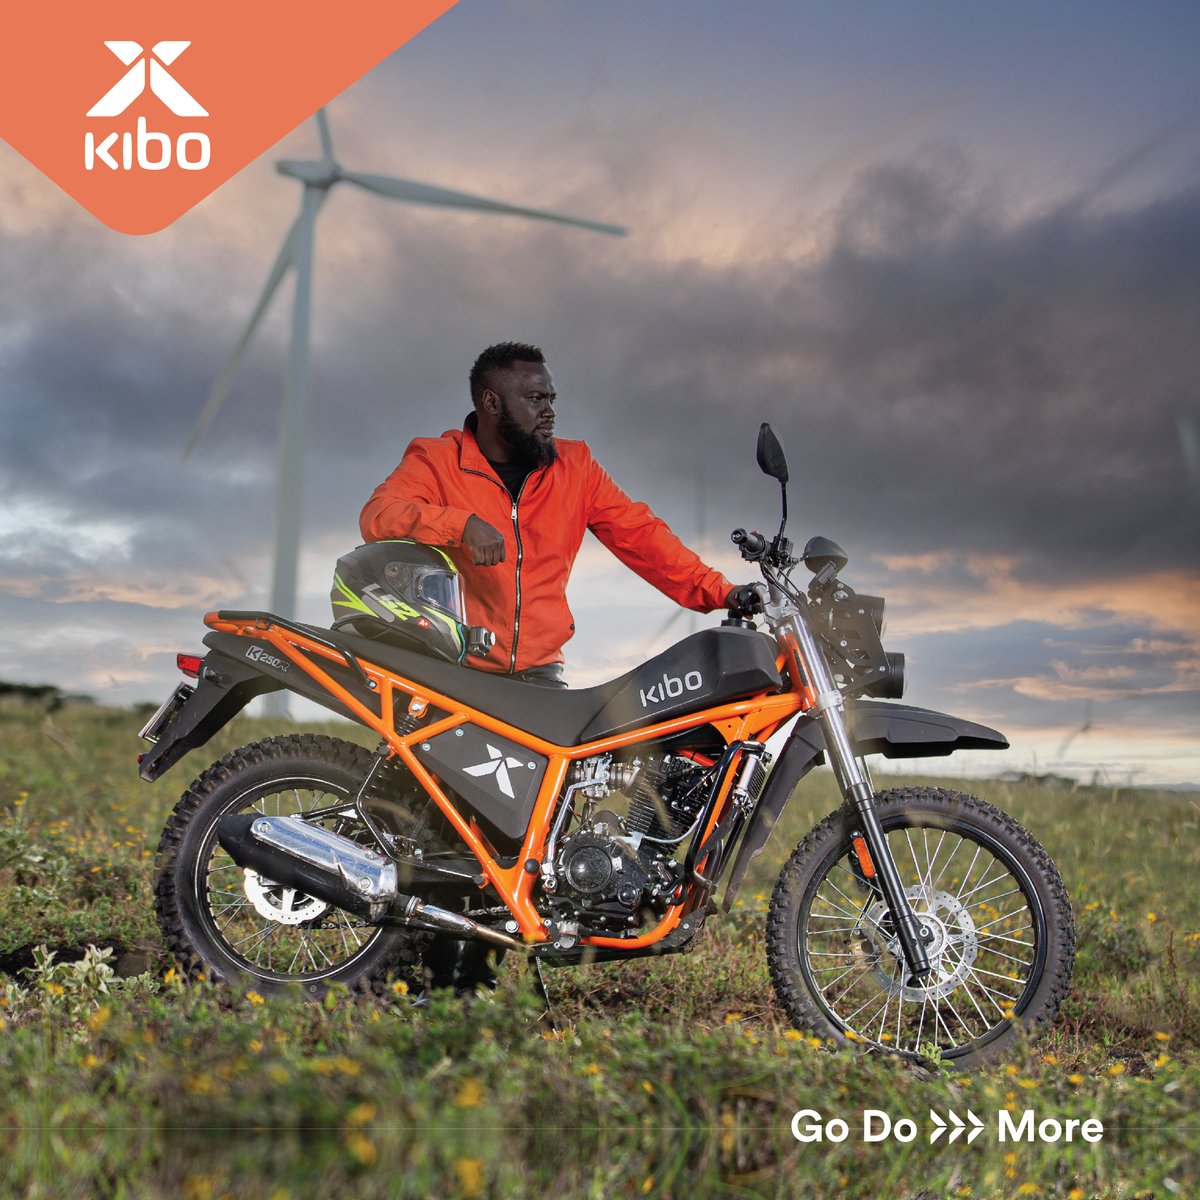 Take the Kibo K250R off-road and explore new terrains with confidence.

#AdventureAwaits #GoAllOut #KiboK250R #motorcycle #motorcycleadventure #motorcycletouring #motorcycleadventures #bikeride #RideInStyle #rideordie #kenya #kenyanriders